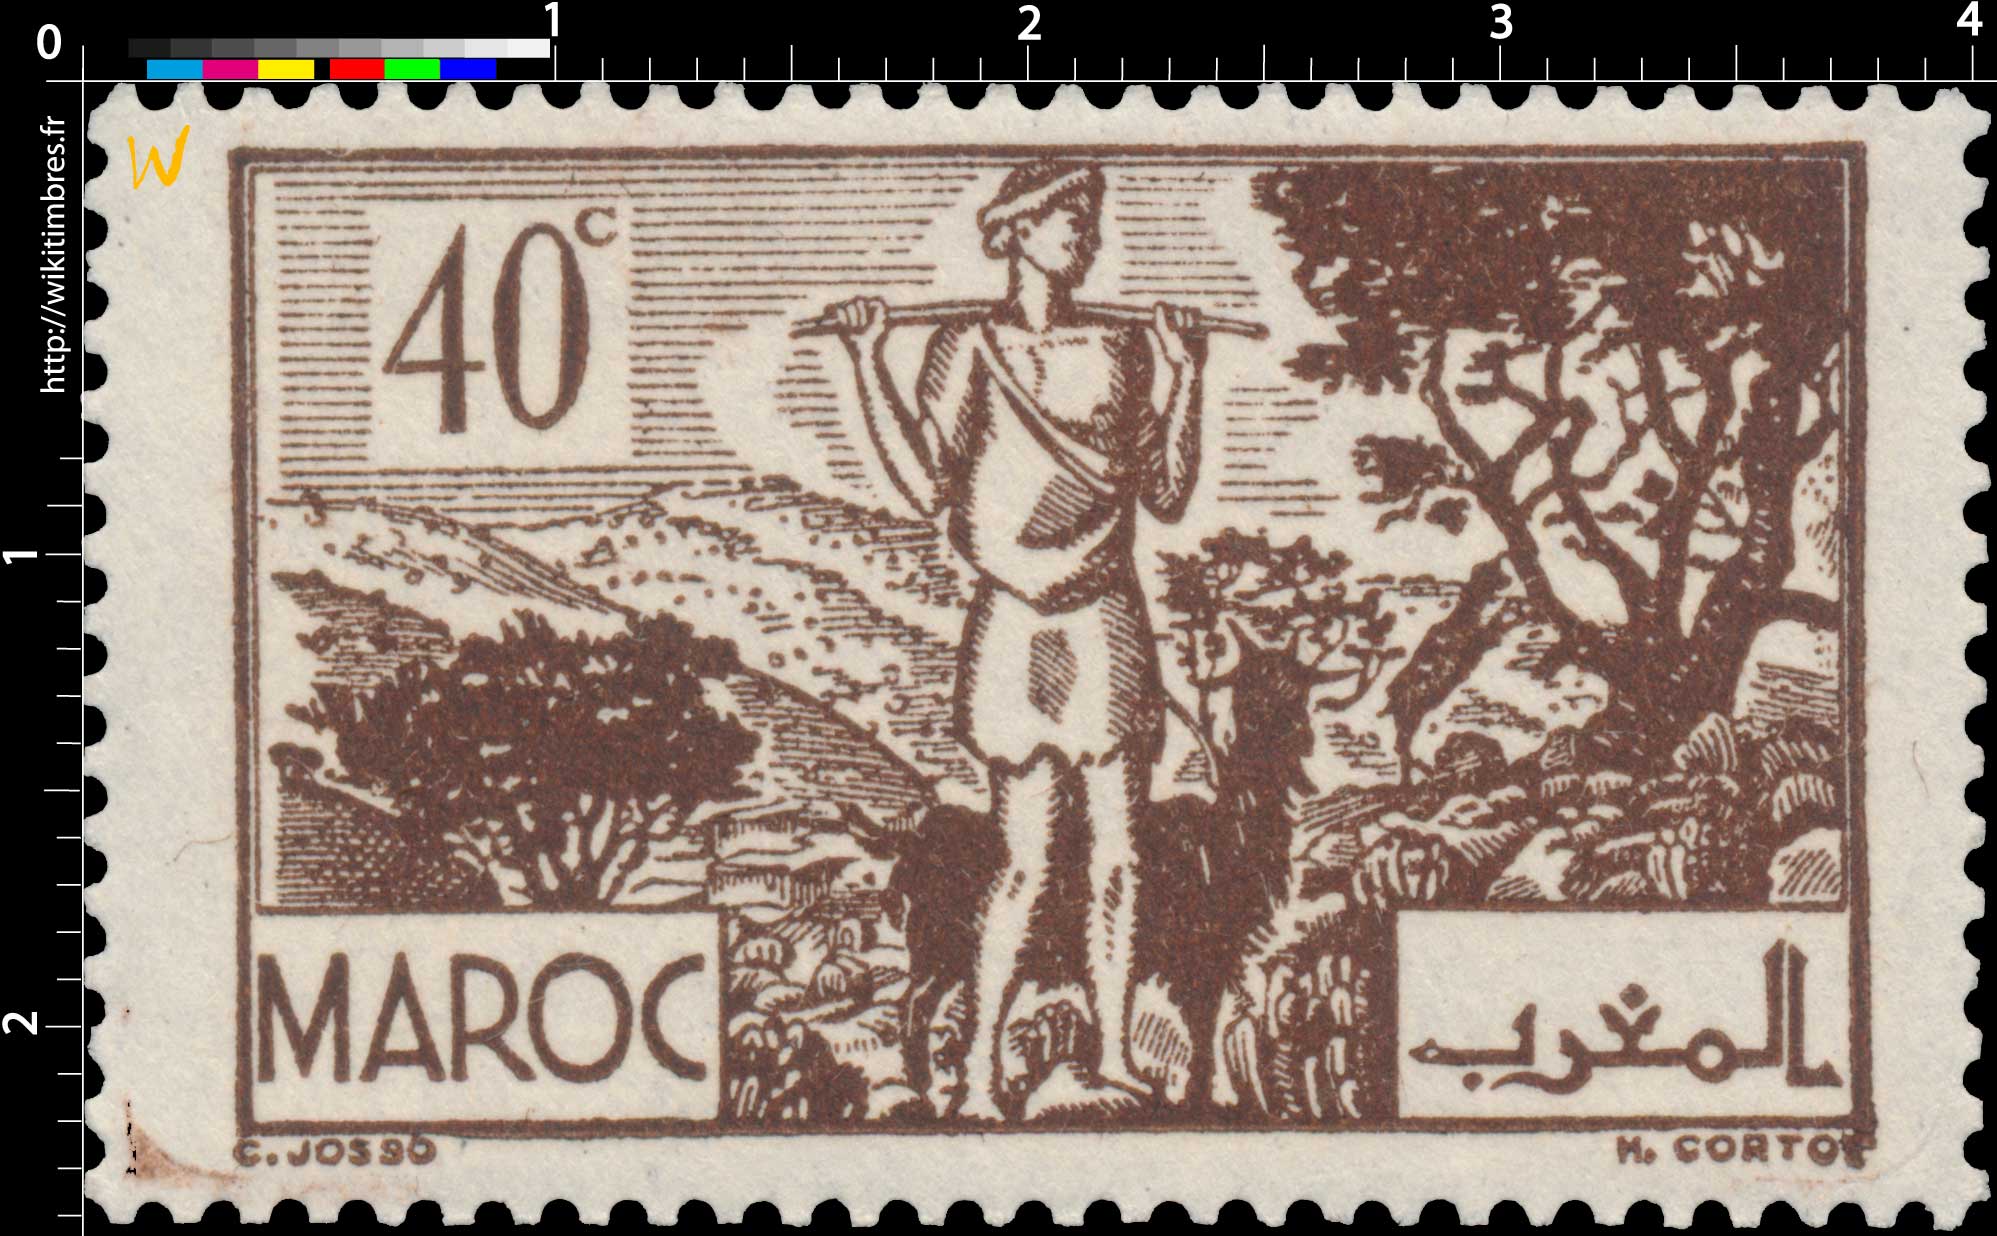 1945 Maroc - Les Arganiers